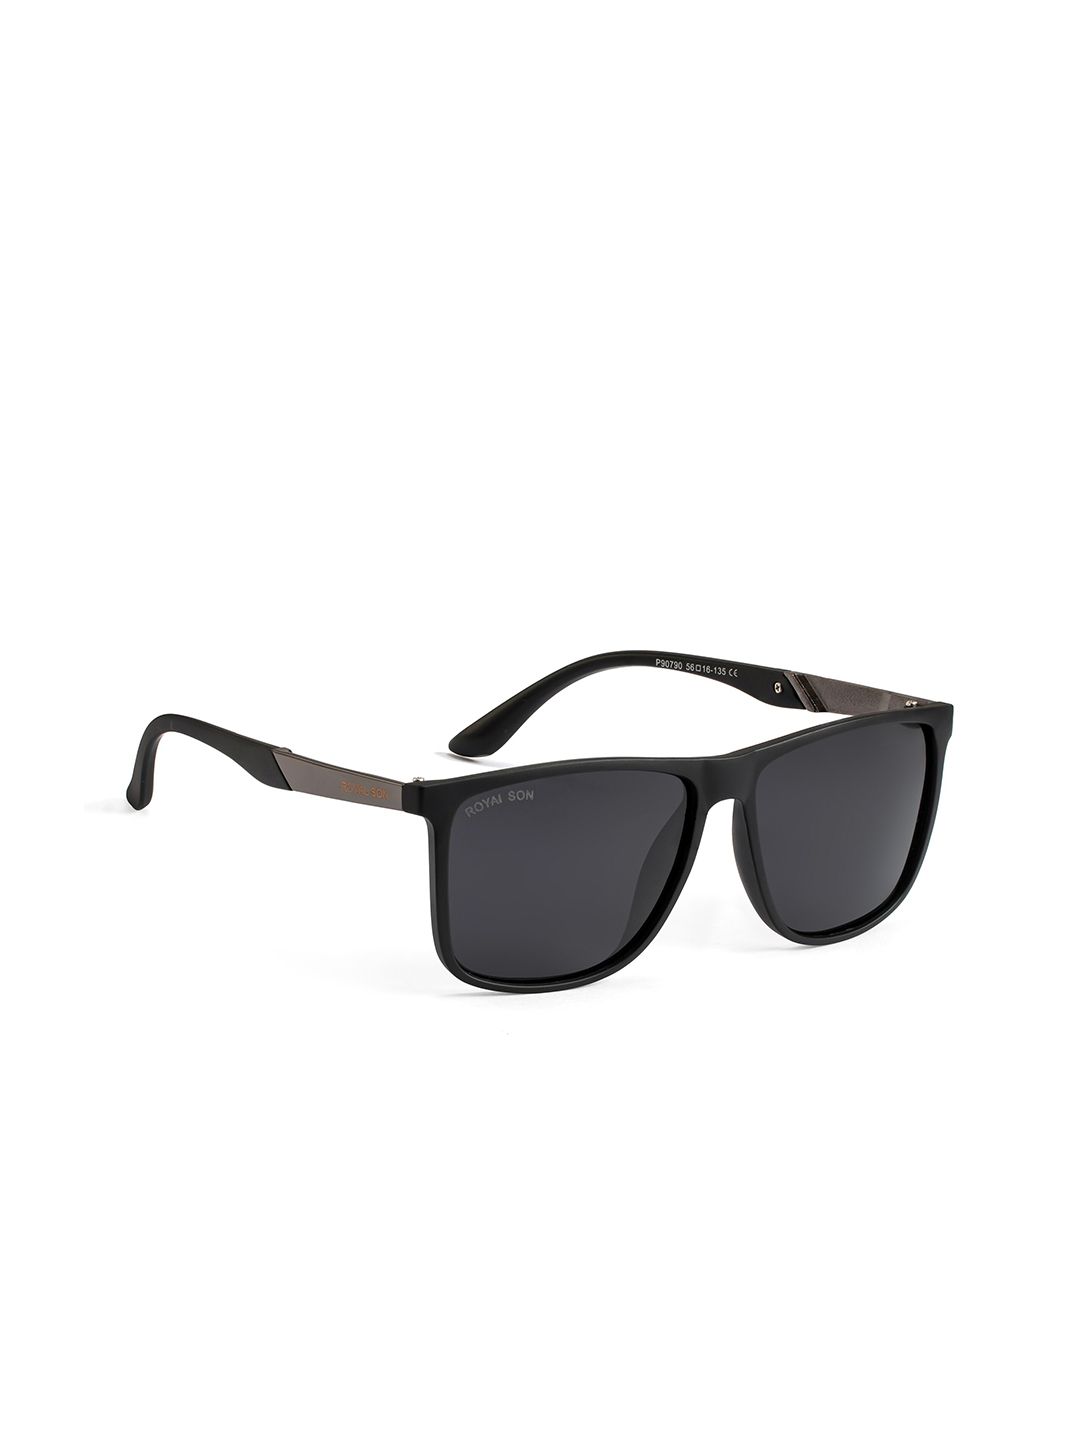 ROYAL SON Unisex Black Lens & Black Sunglasses Polarised UV Protected Lens CHI00122-C1 Price in India